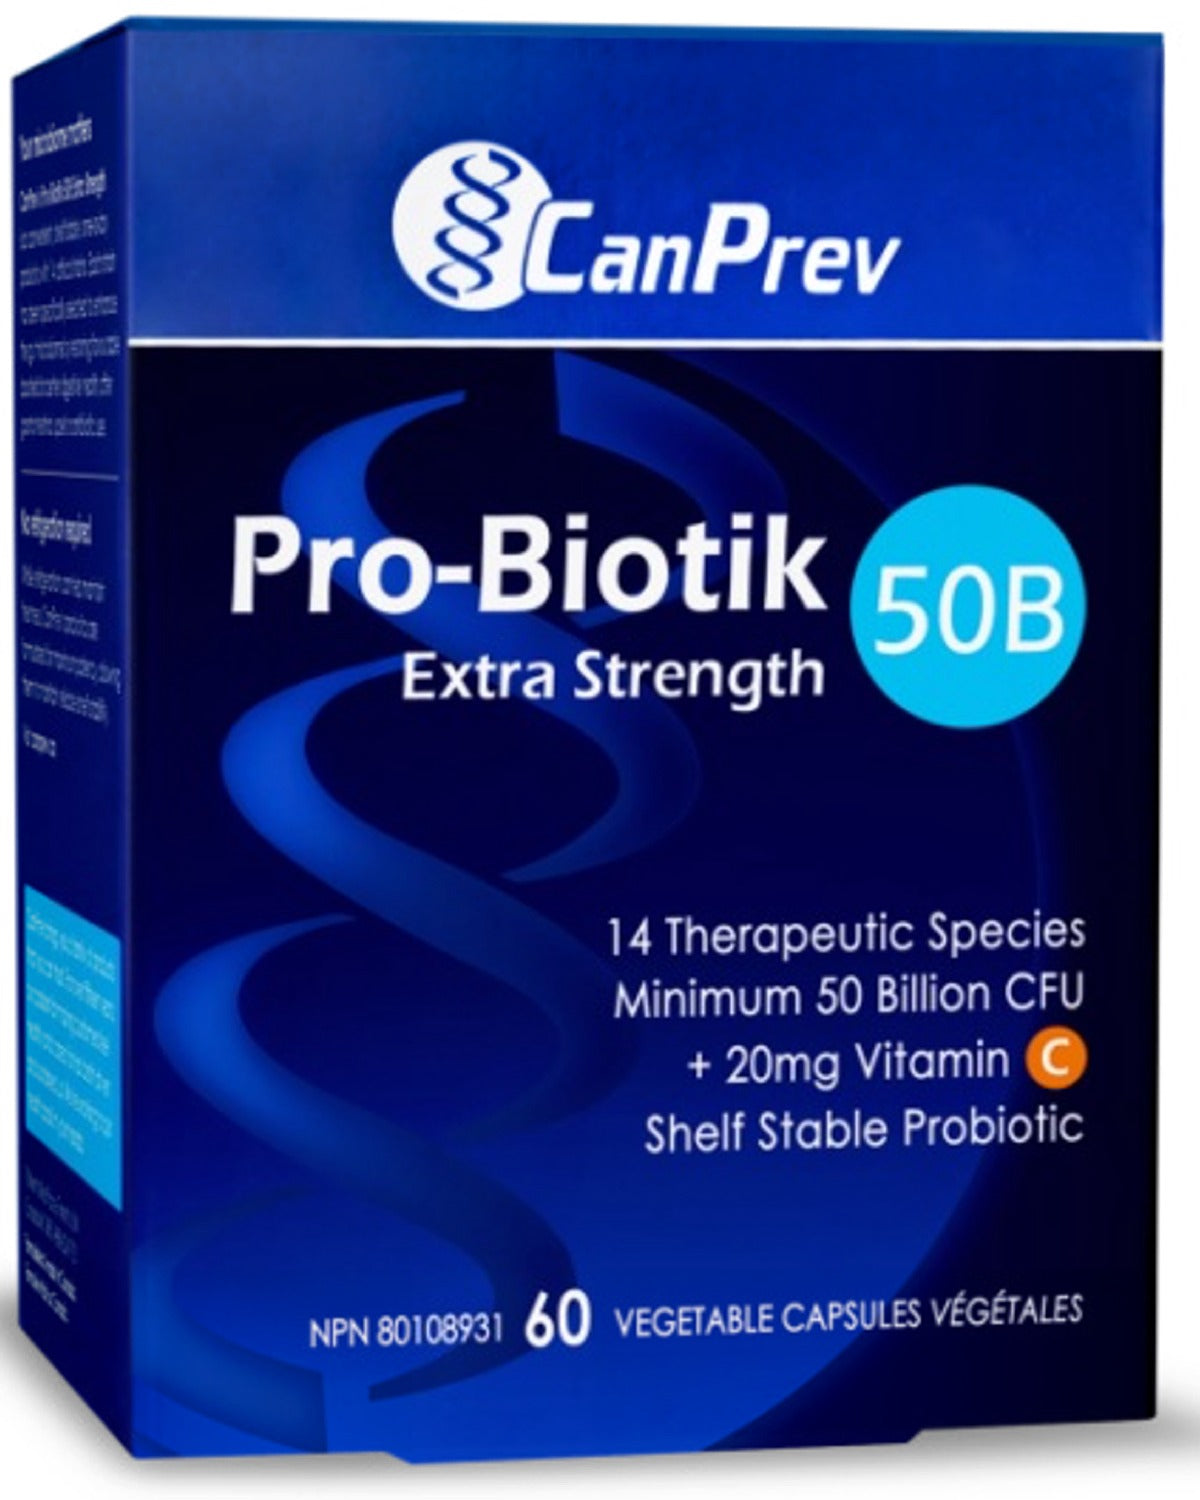 CanPrev Pro-Biotik 50B (Extra Strength - 60 vcaps)